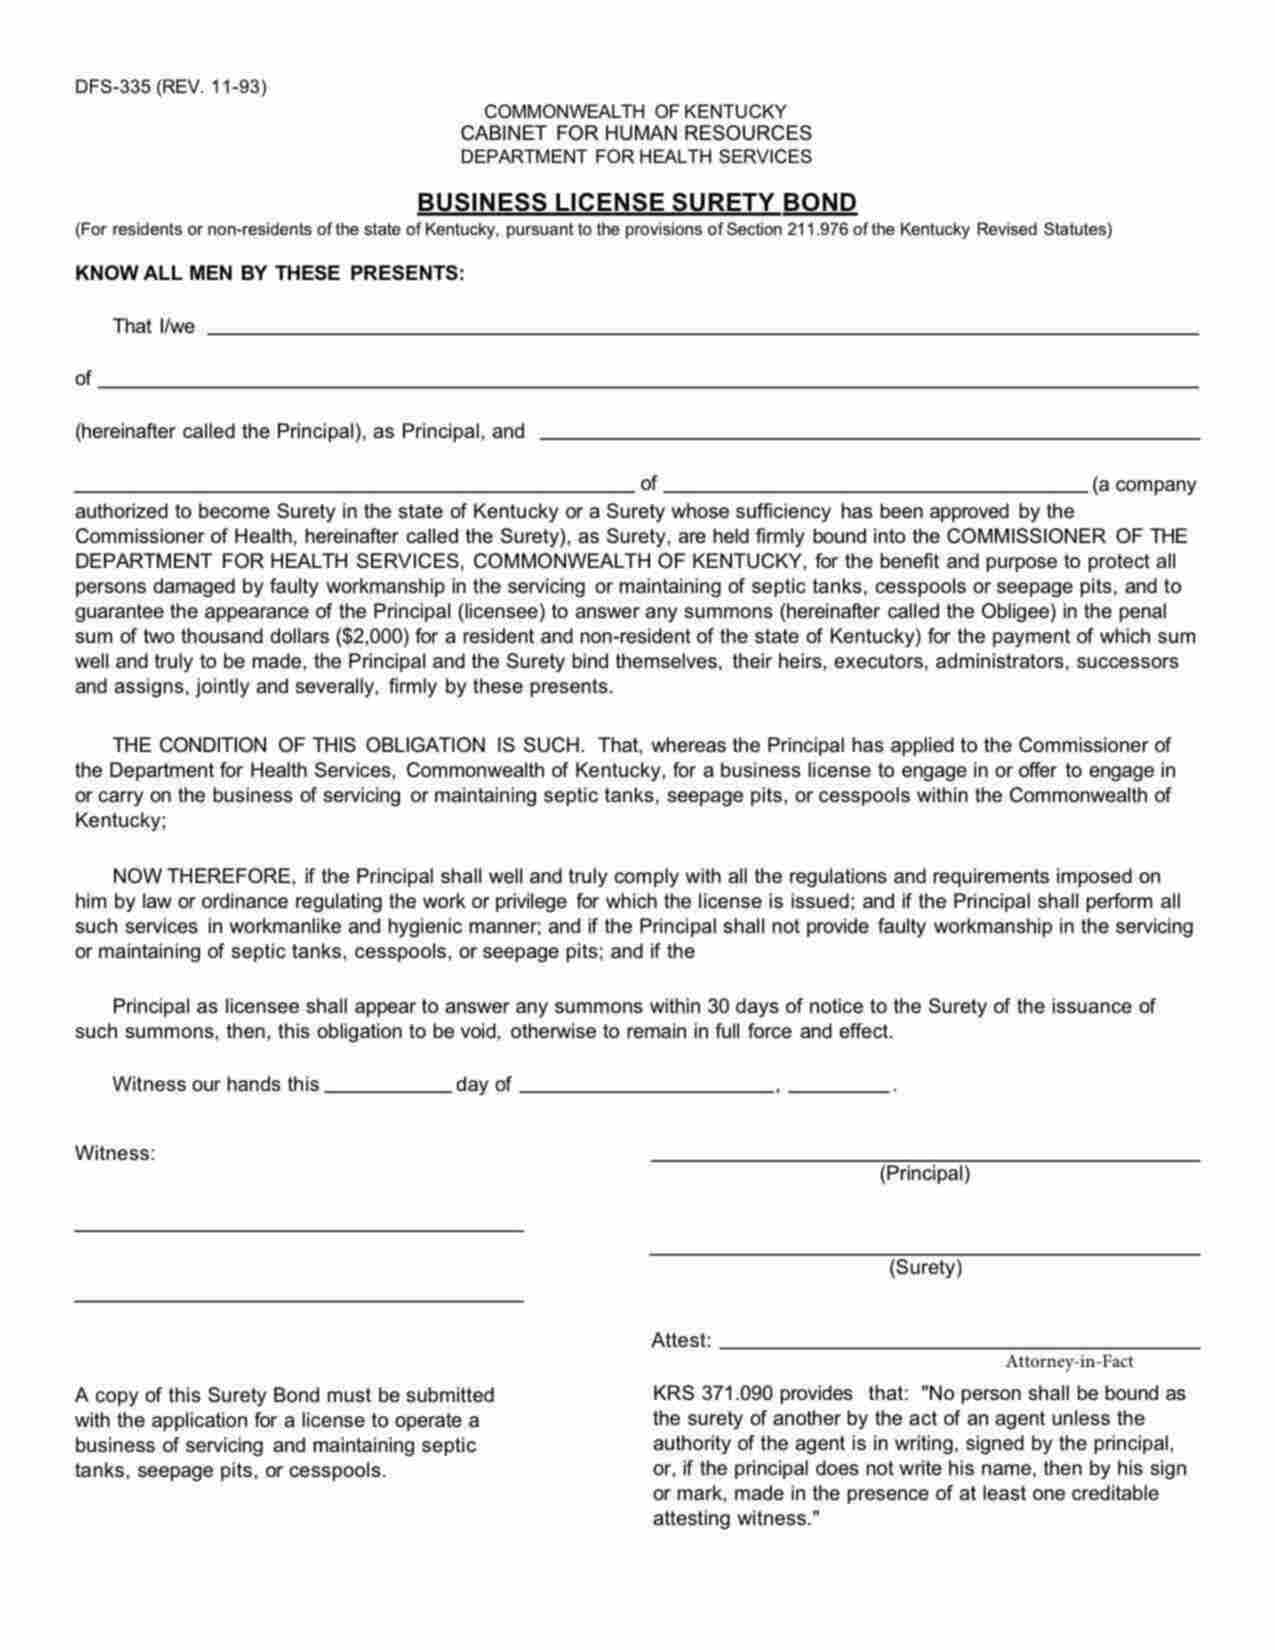 Kentucky Septic Tank Servicing Business License Bond Form